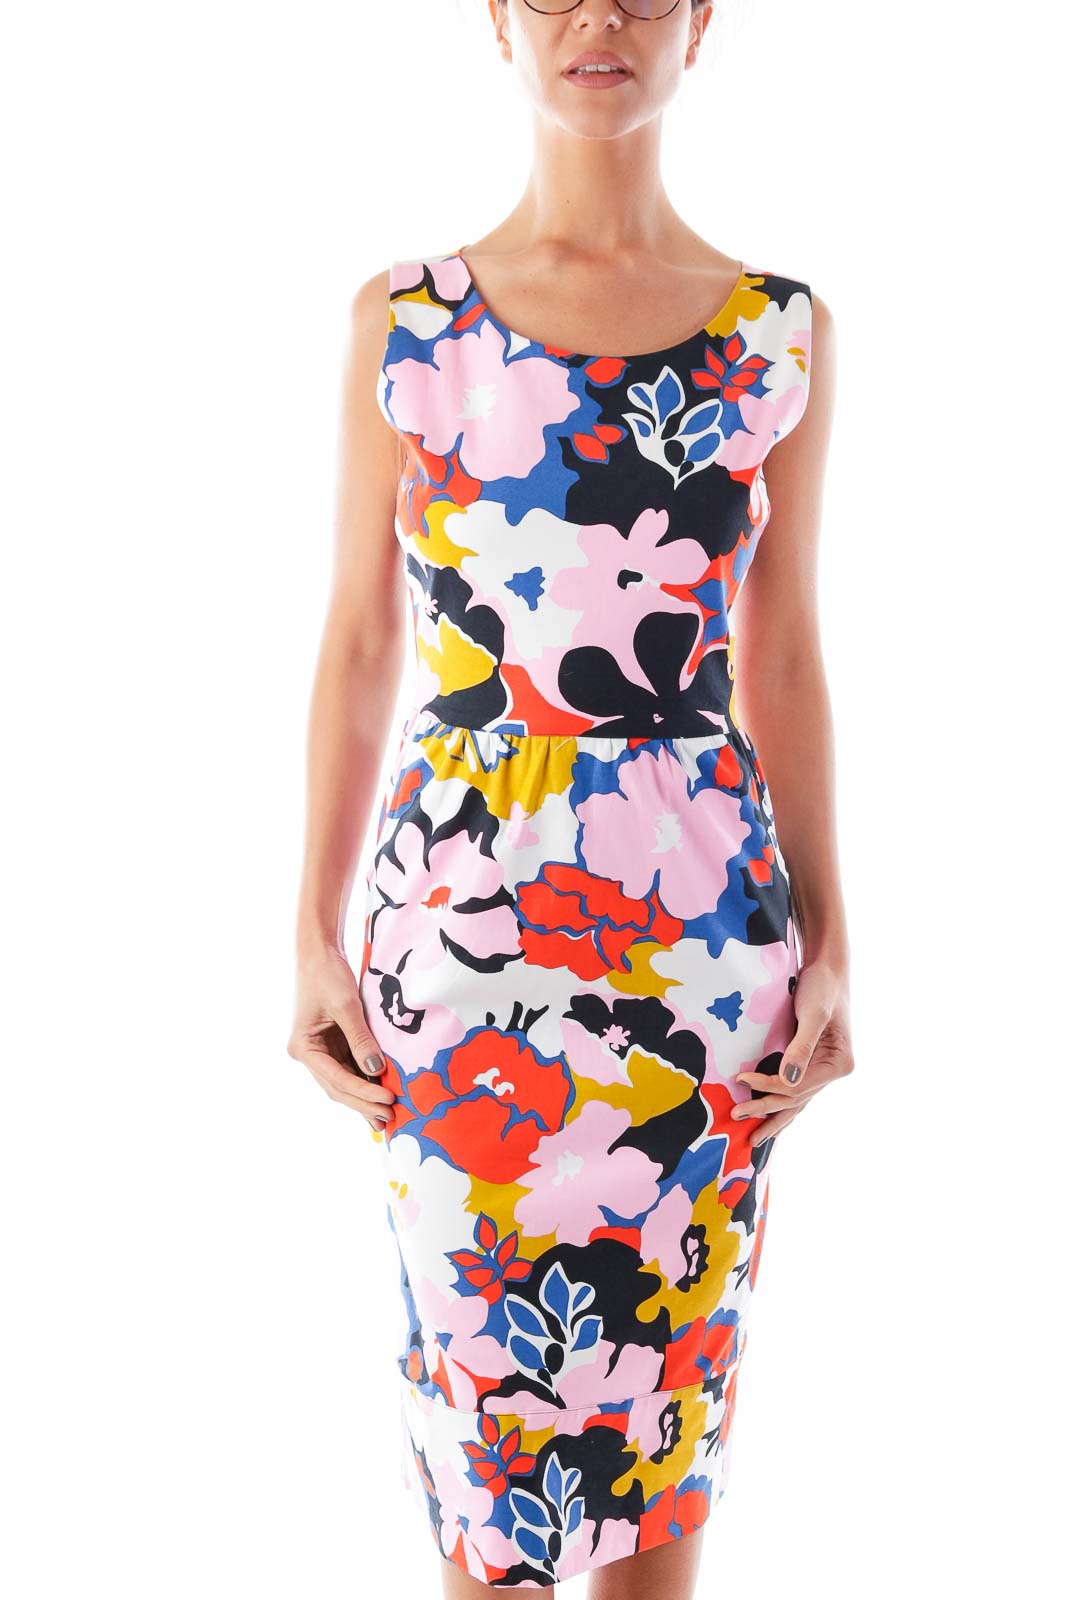 Floral Print Dress Front